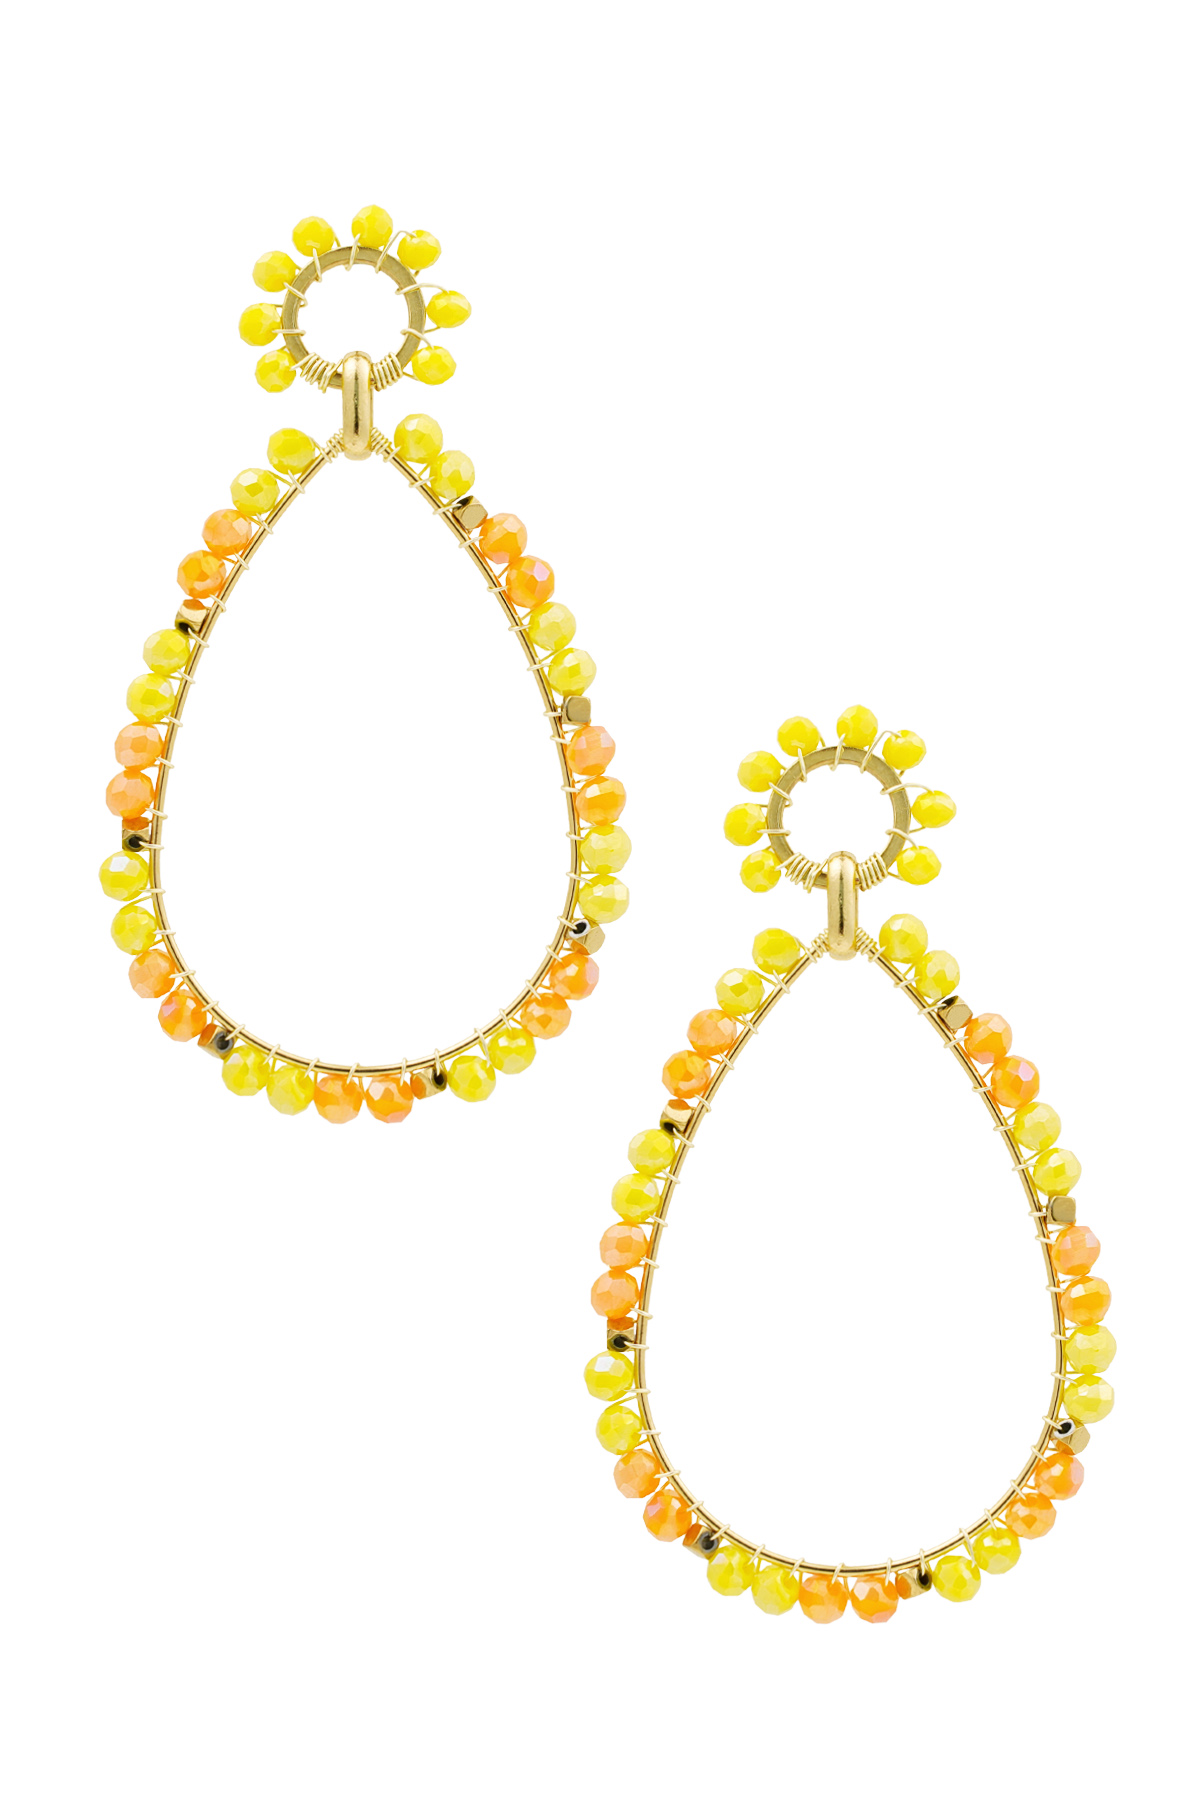 Earrings drop pendant with beads yellow - orange